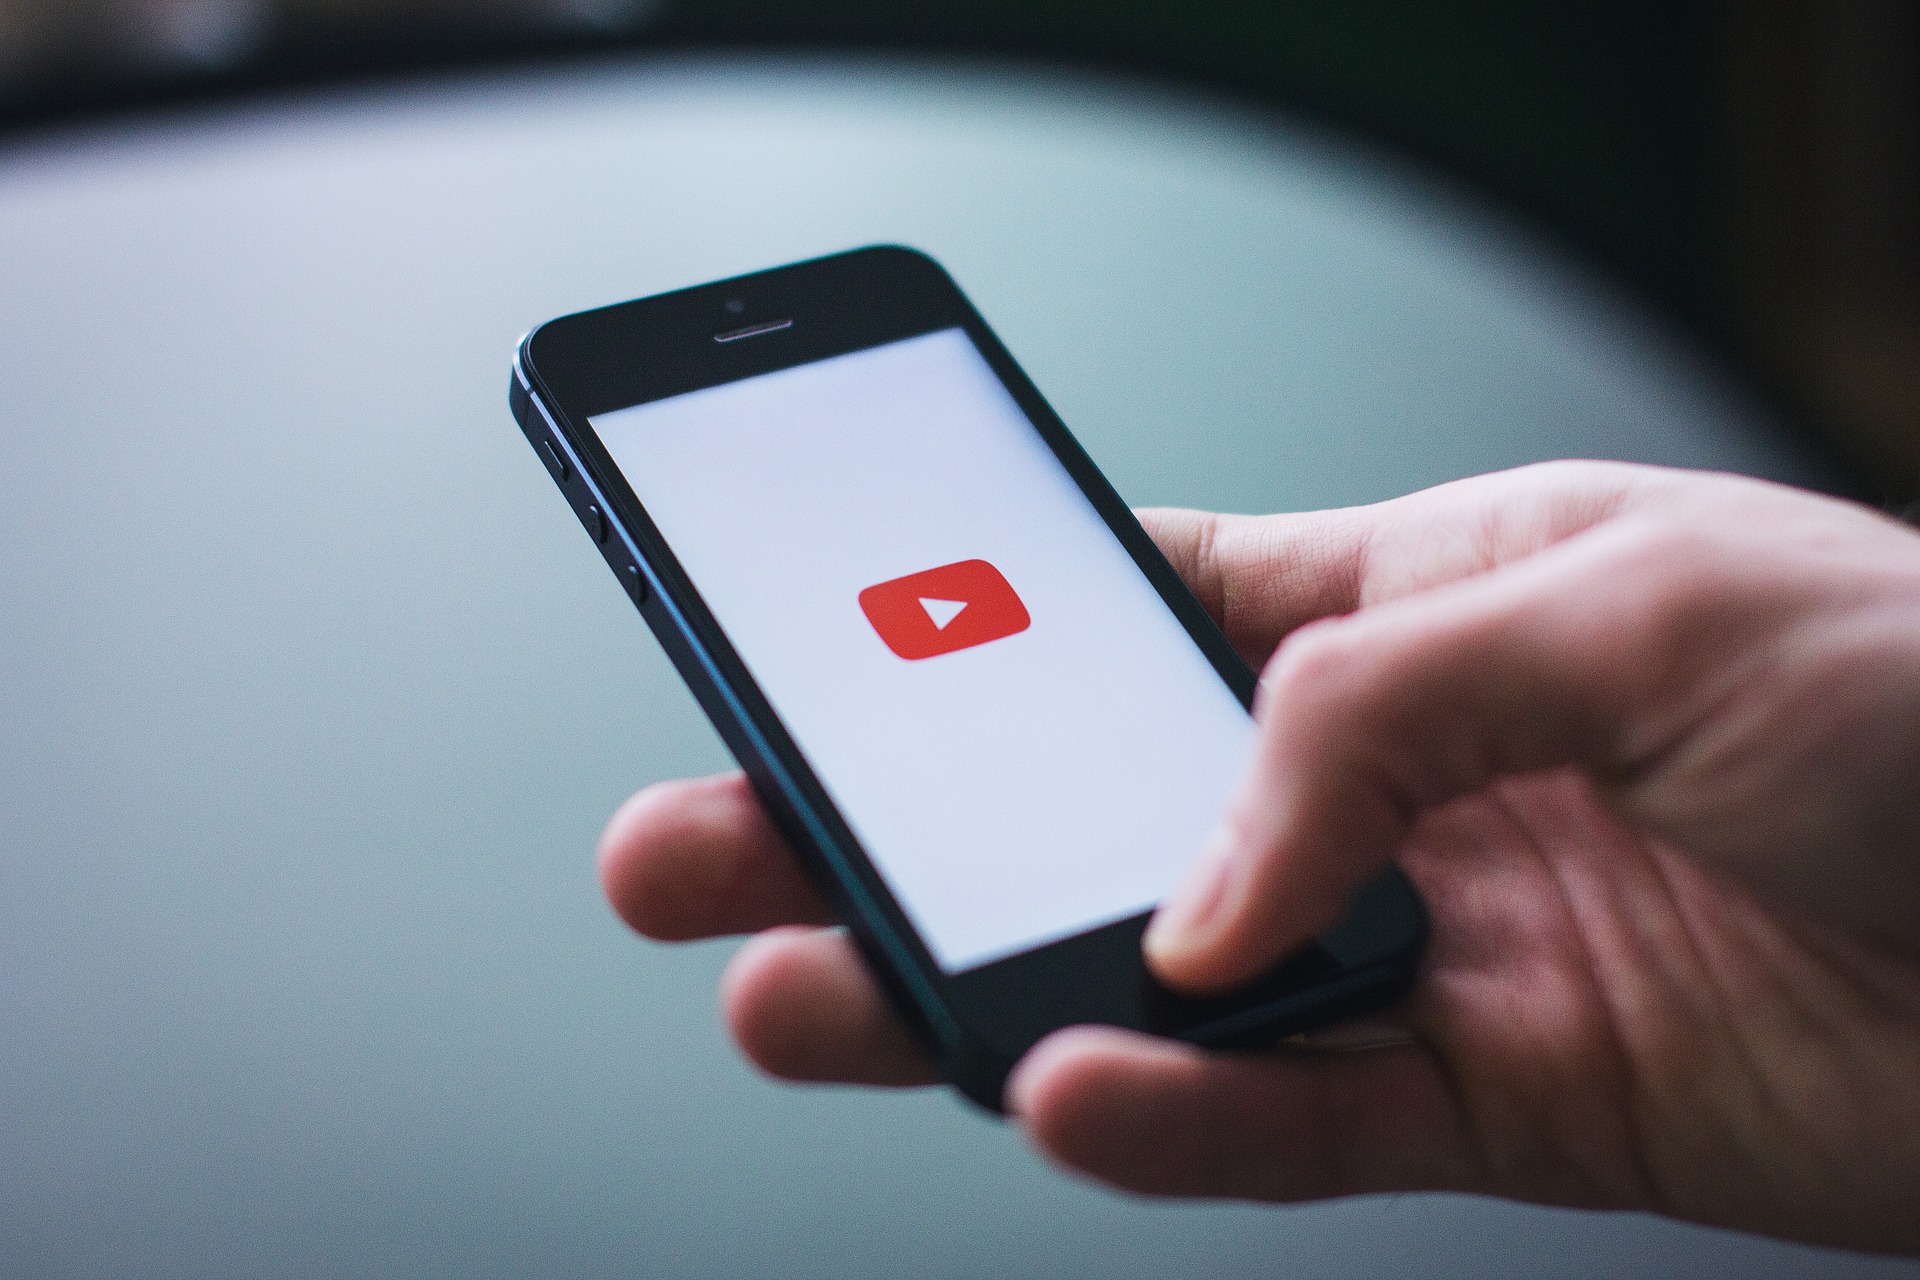 YouTube anbefaler mobiltelefoner for videoavspilling - iPhone ikke blant de anbefalte